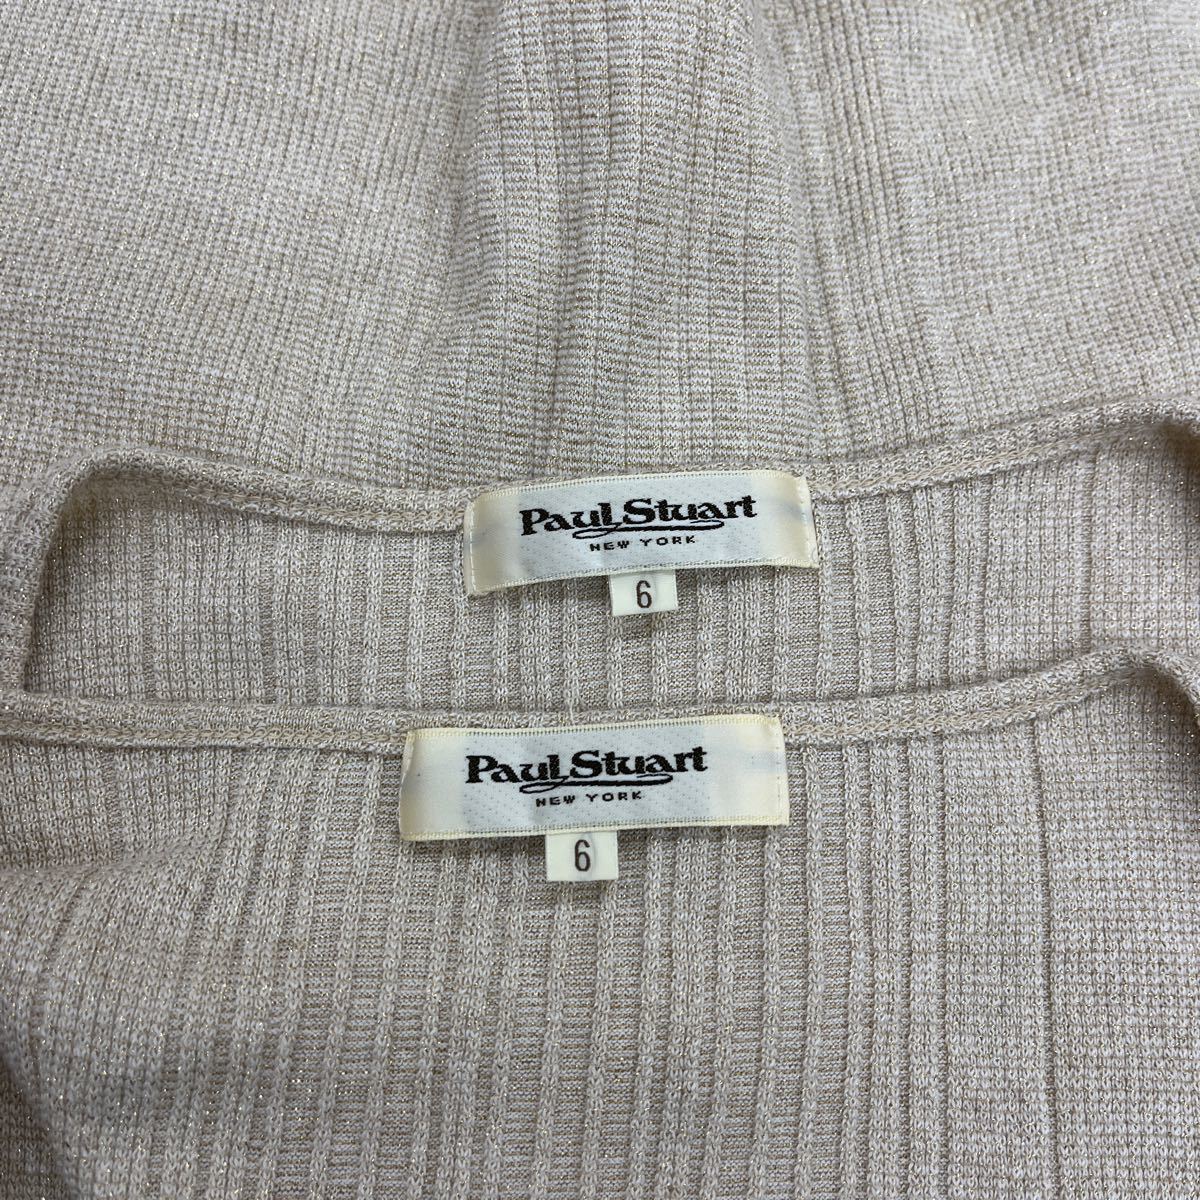 1286* Paul Stuart paul (pole) Stuart ensemble cardigan long sleeve knitted short sleeves casual beige lady's 6